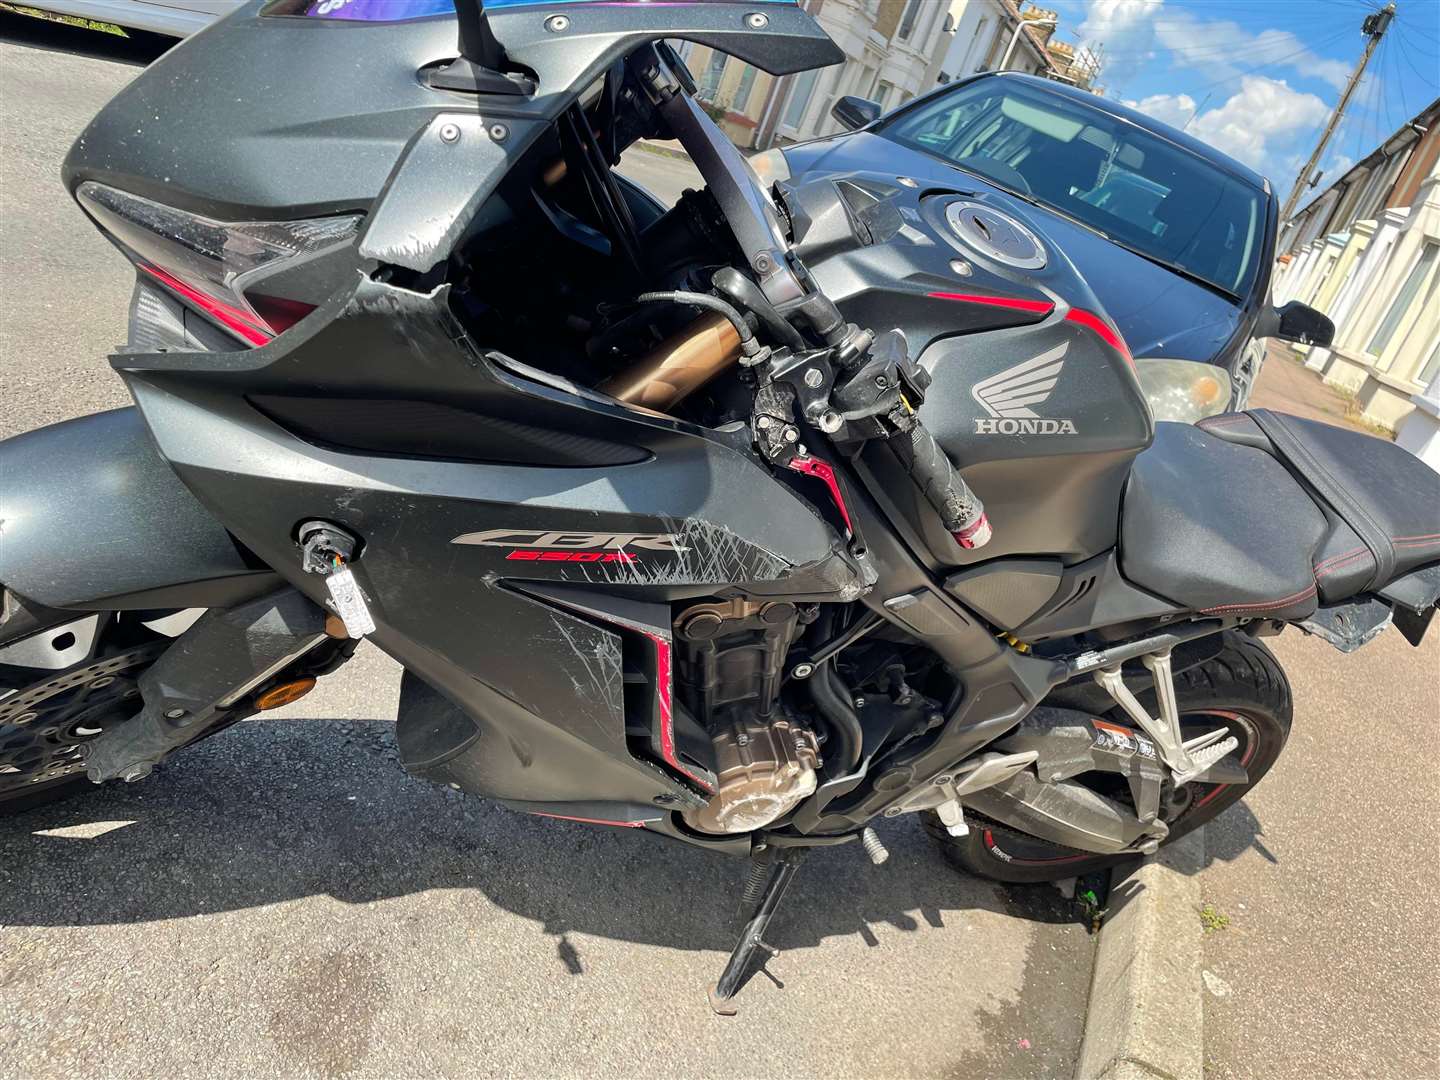 Zara's bike mostly suffered fairing damage